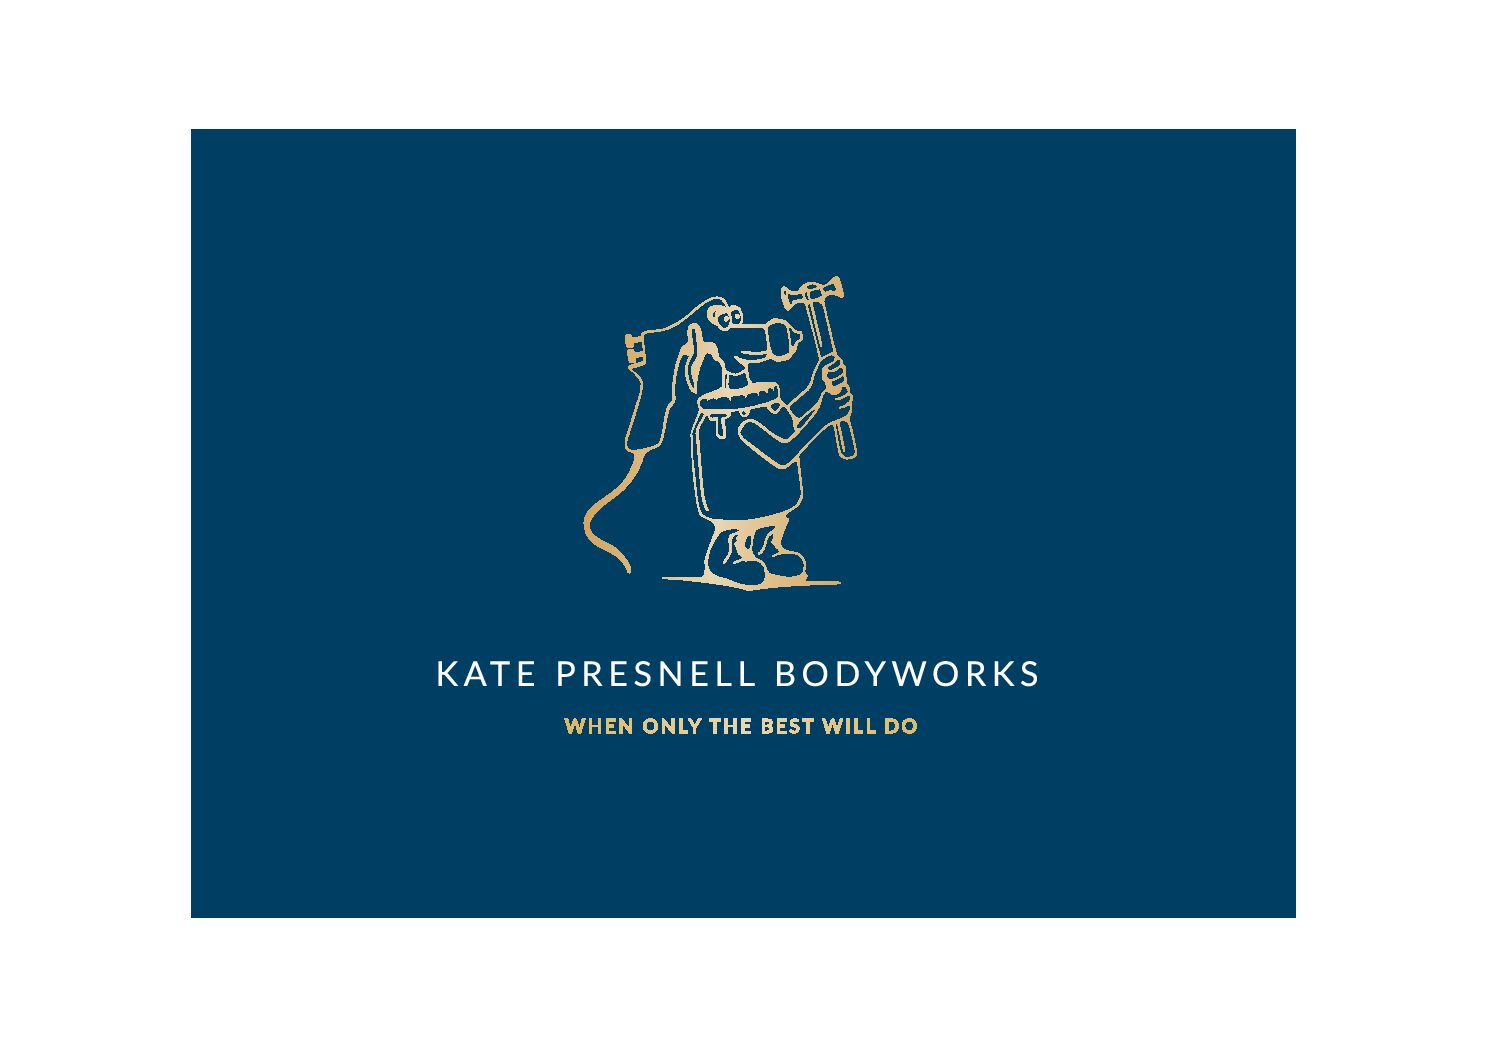 Kate Presnell Bodyworks